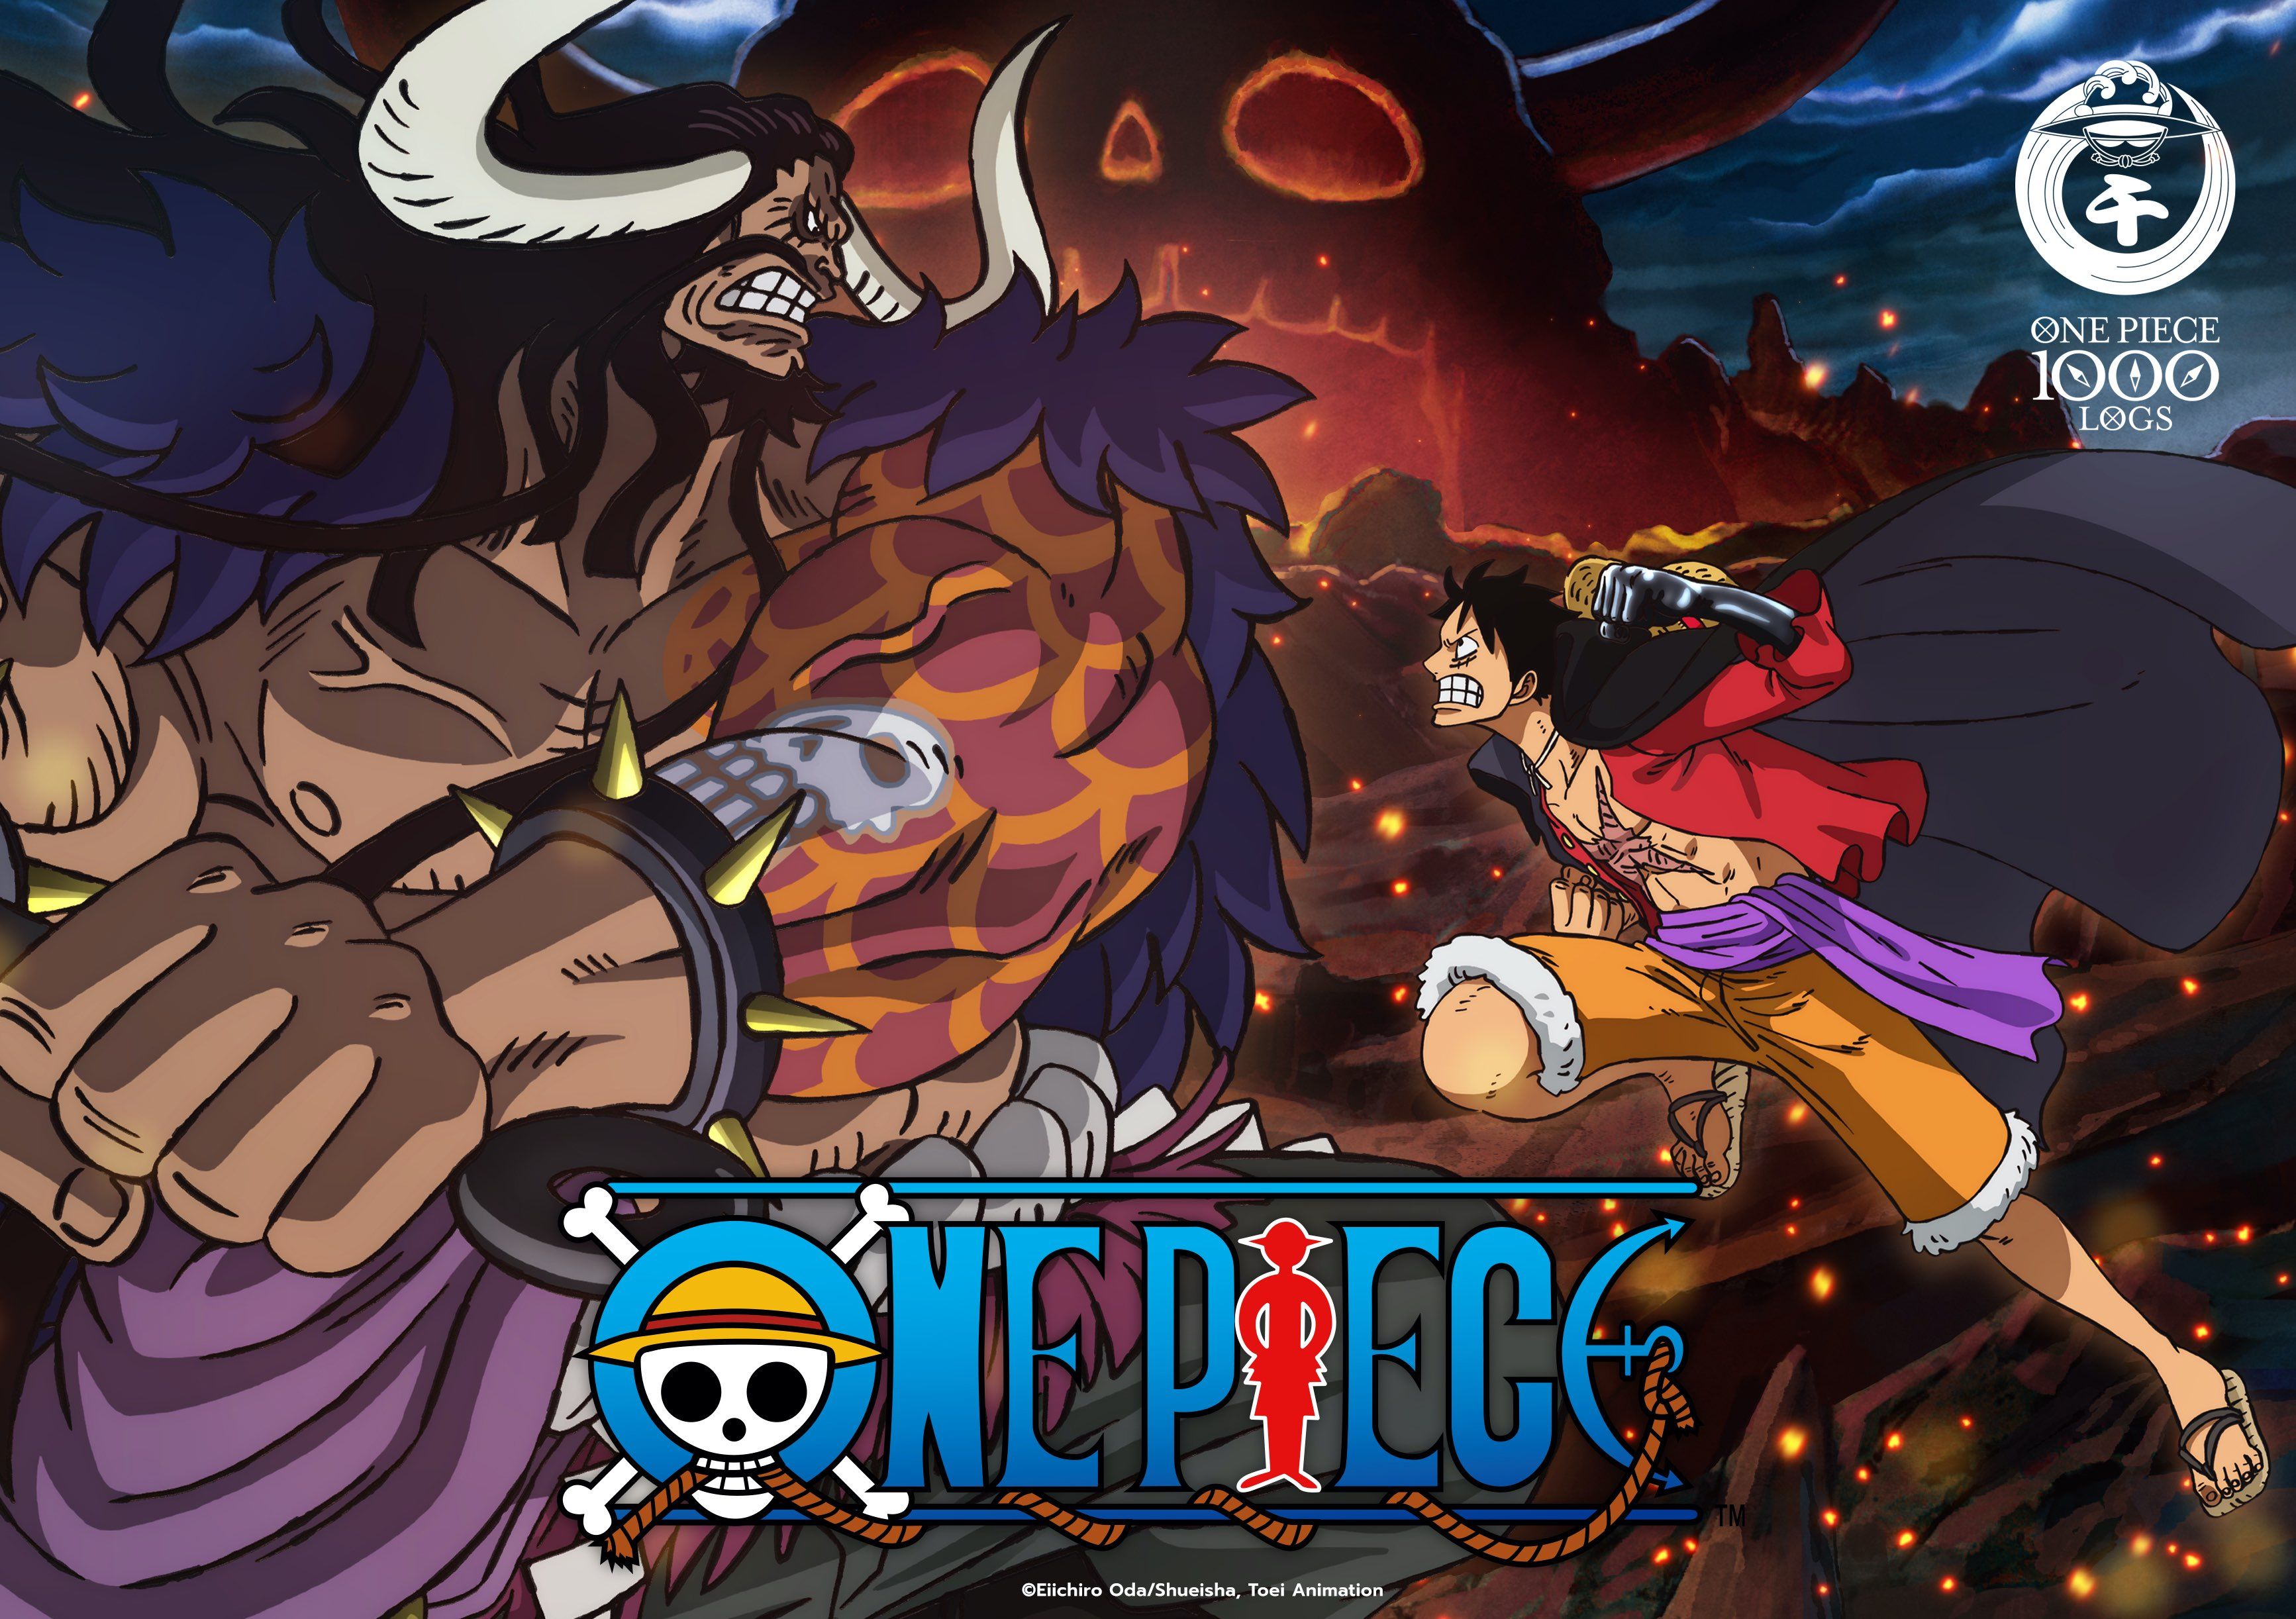 NONTON Anime One Piece Episode 1026 Full Sub Indonesia Kualitas HD, Bukan O...